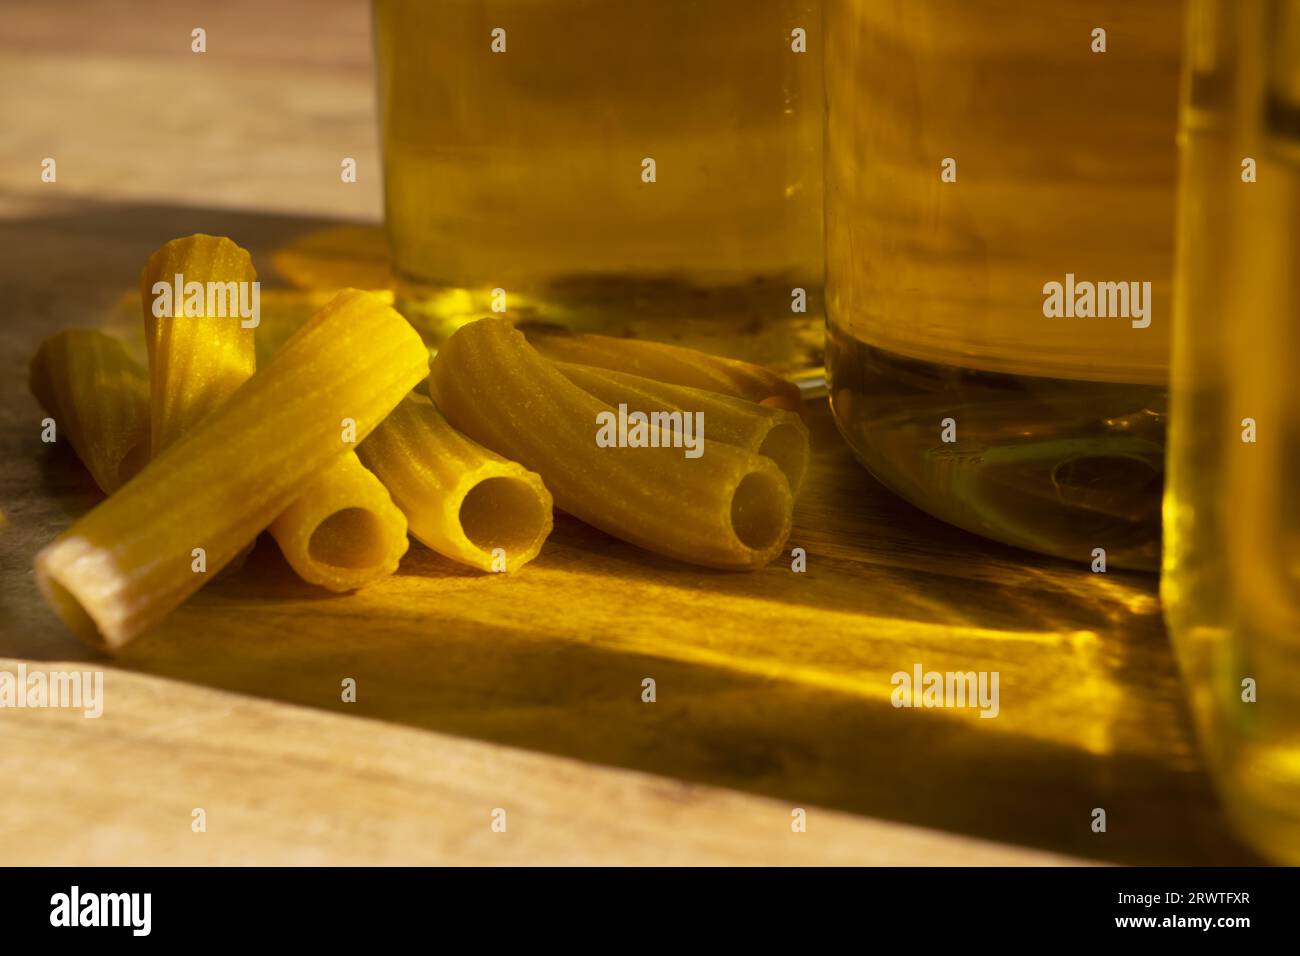 pasta vista attraverso i riflessi delle bottiglie d'olio Foto Stock